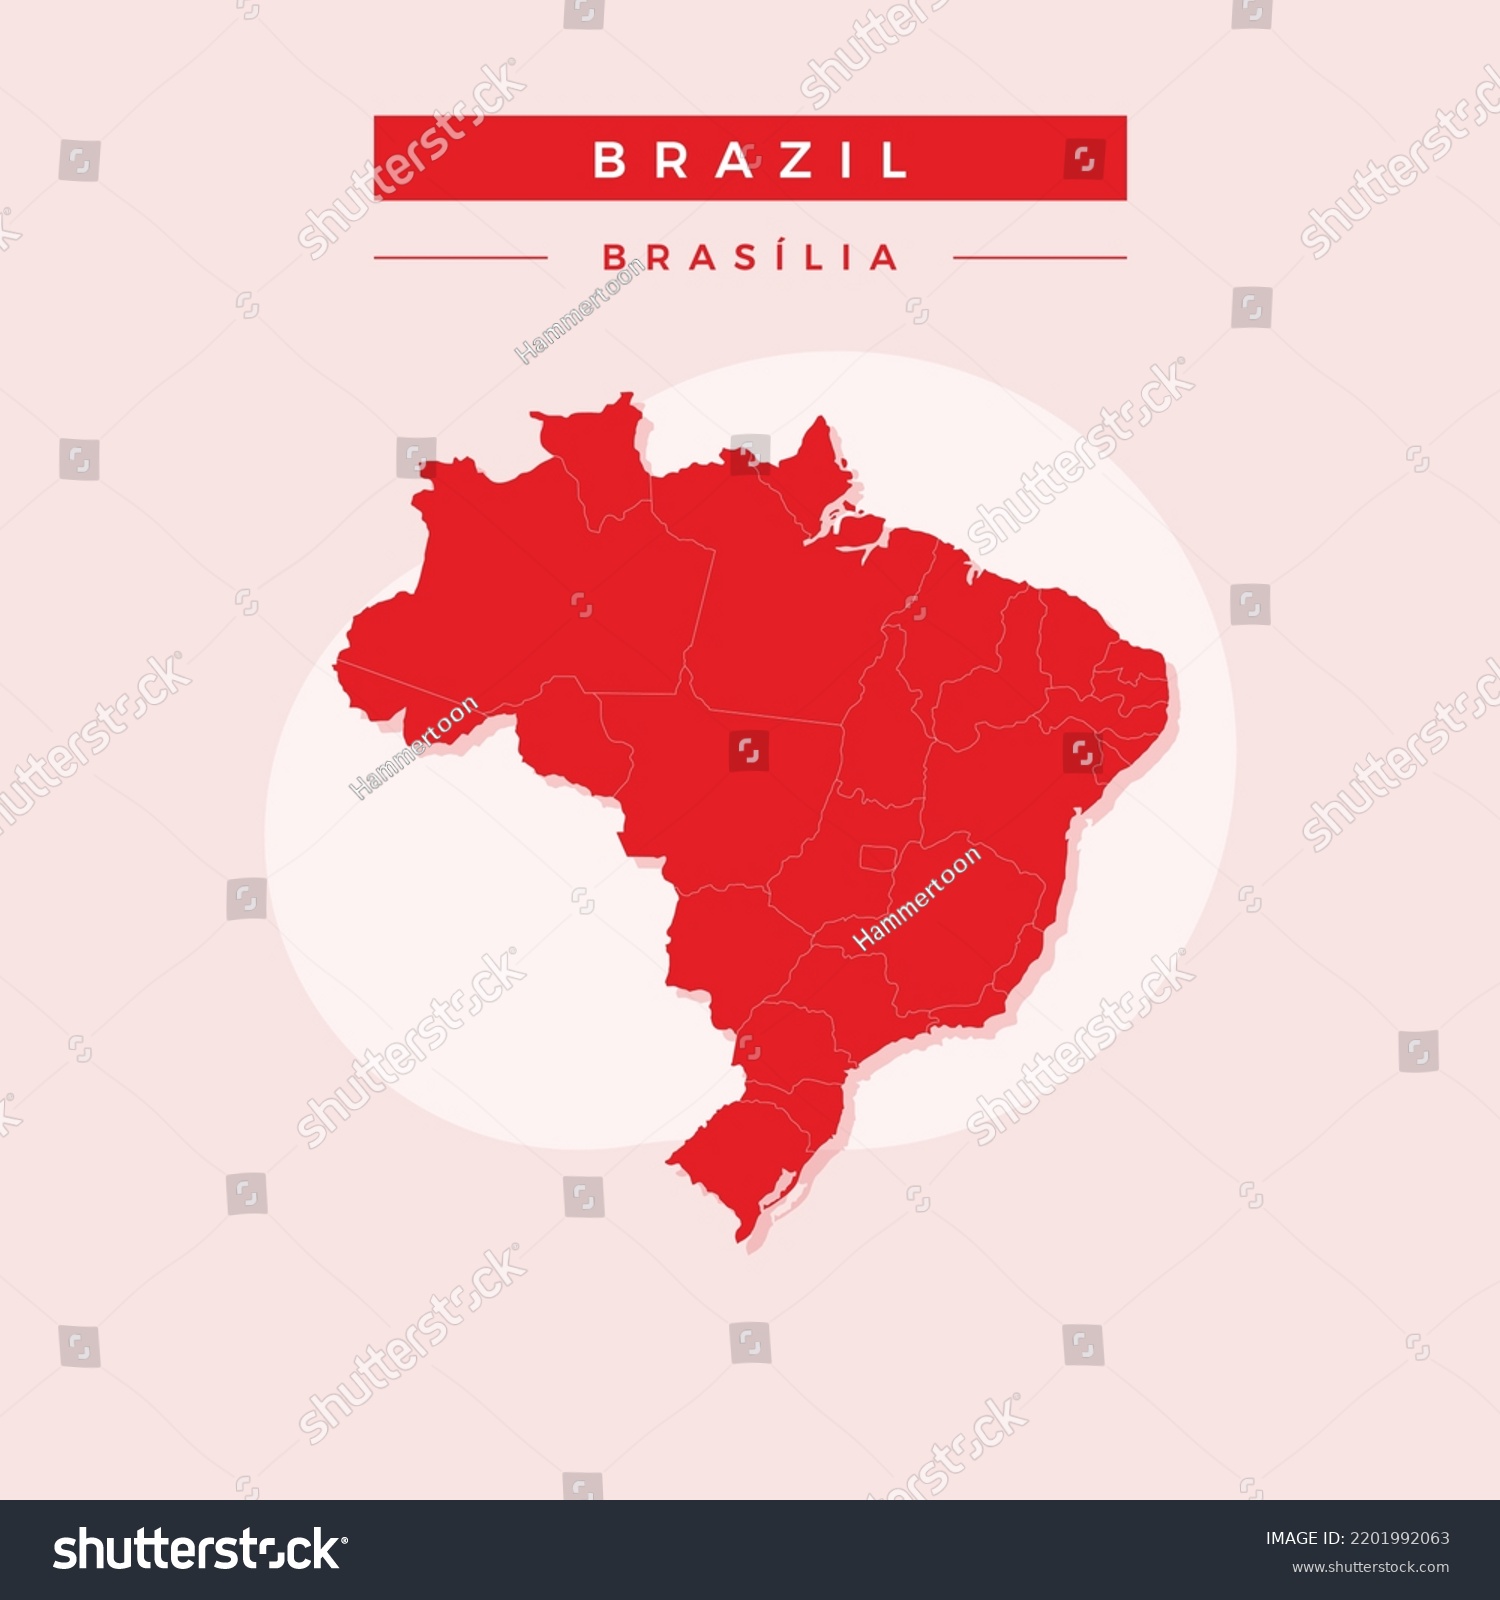 Stock Vector National Map Of Brazil Brazil Map Vector Illustration Vector Of Brazil Map 2201992063 